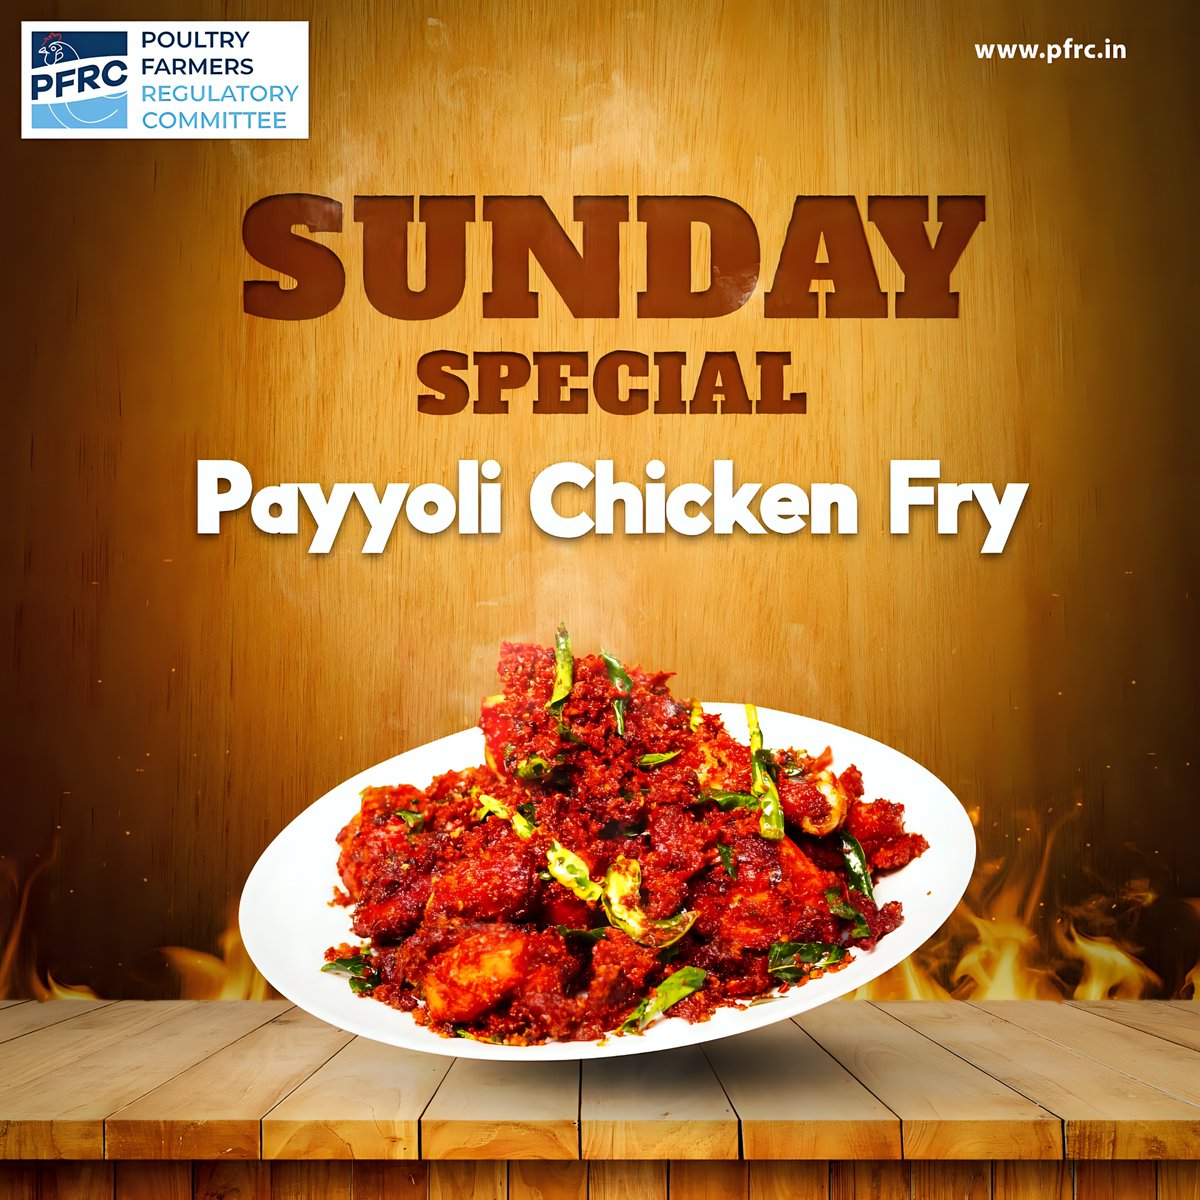 Enjoy this Sunday in a Healthy & Tasty Way with Payyoli Chicken Fry!

Recipe Video 👇👇👇

fb.watch/c819SASyAl/

youtu.be/WV2CCTXc2bM

#PFRC #PFRCTN #Tasty #Farm #Chicken #Sunday #FoodLover #HealthyFood #ChickenRecipe #SundaySpecial #PayyoliChickenFry